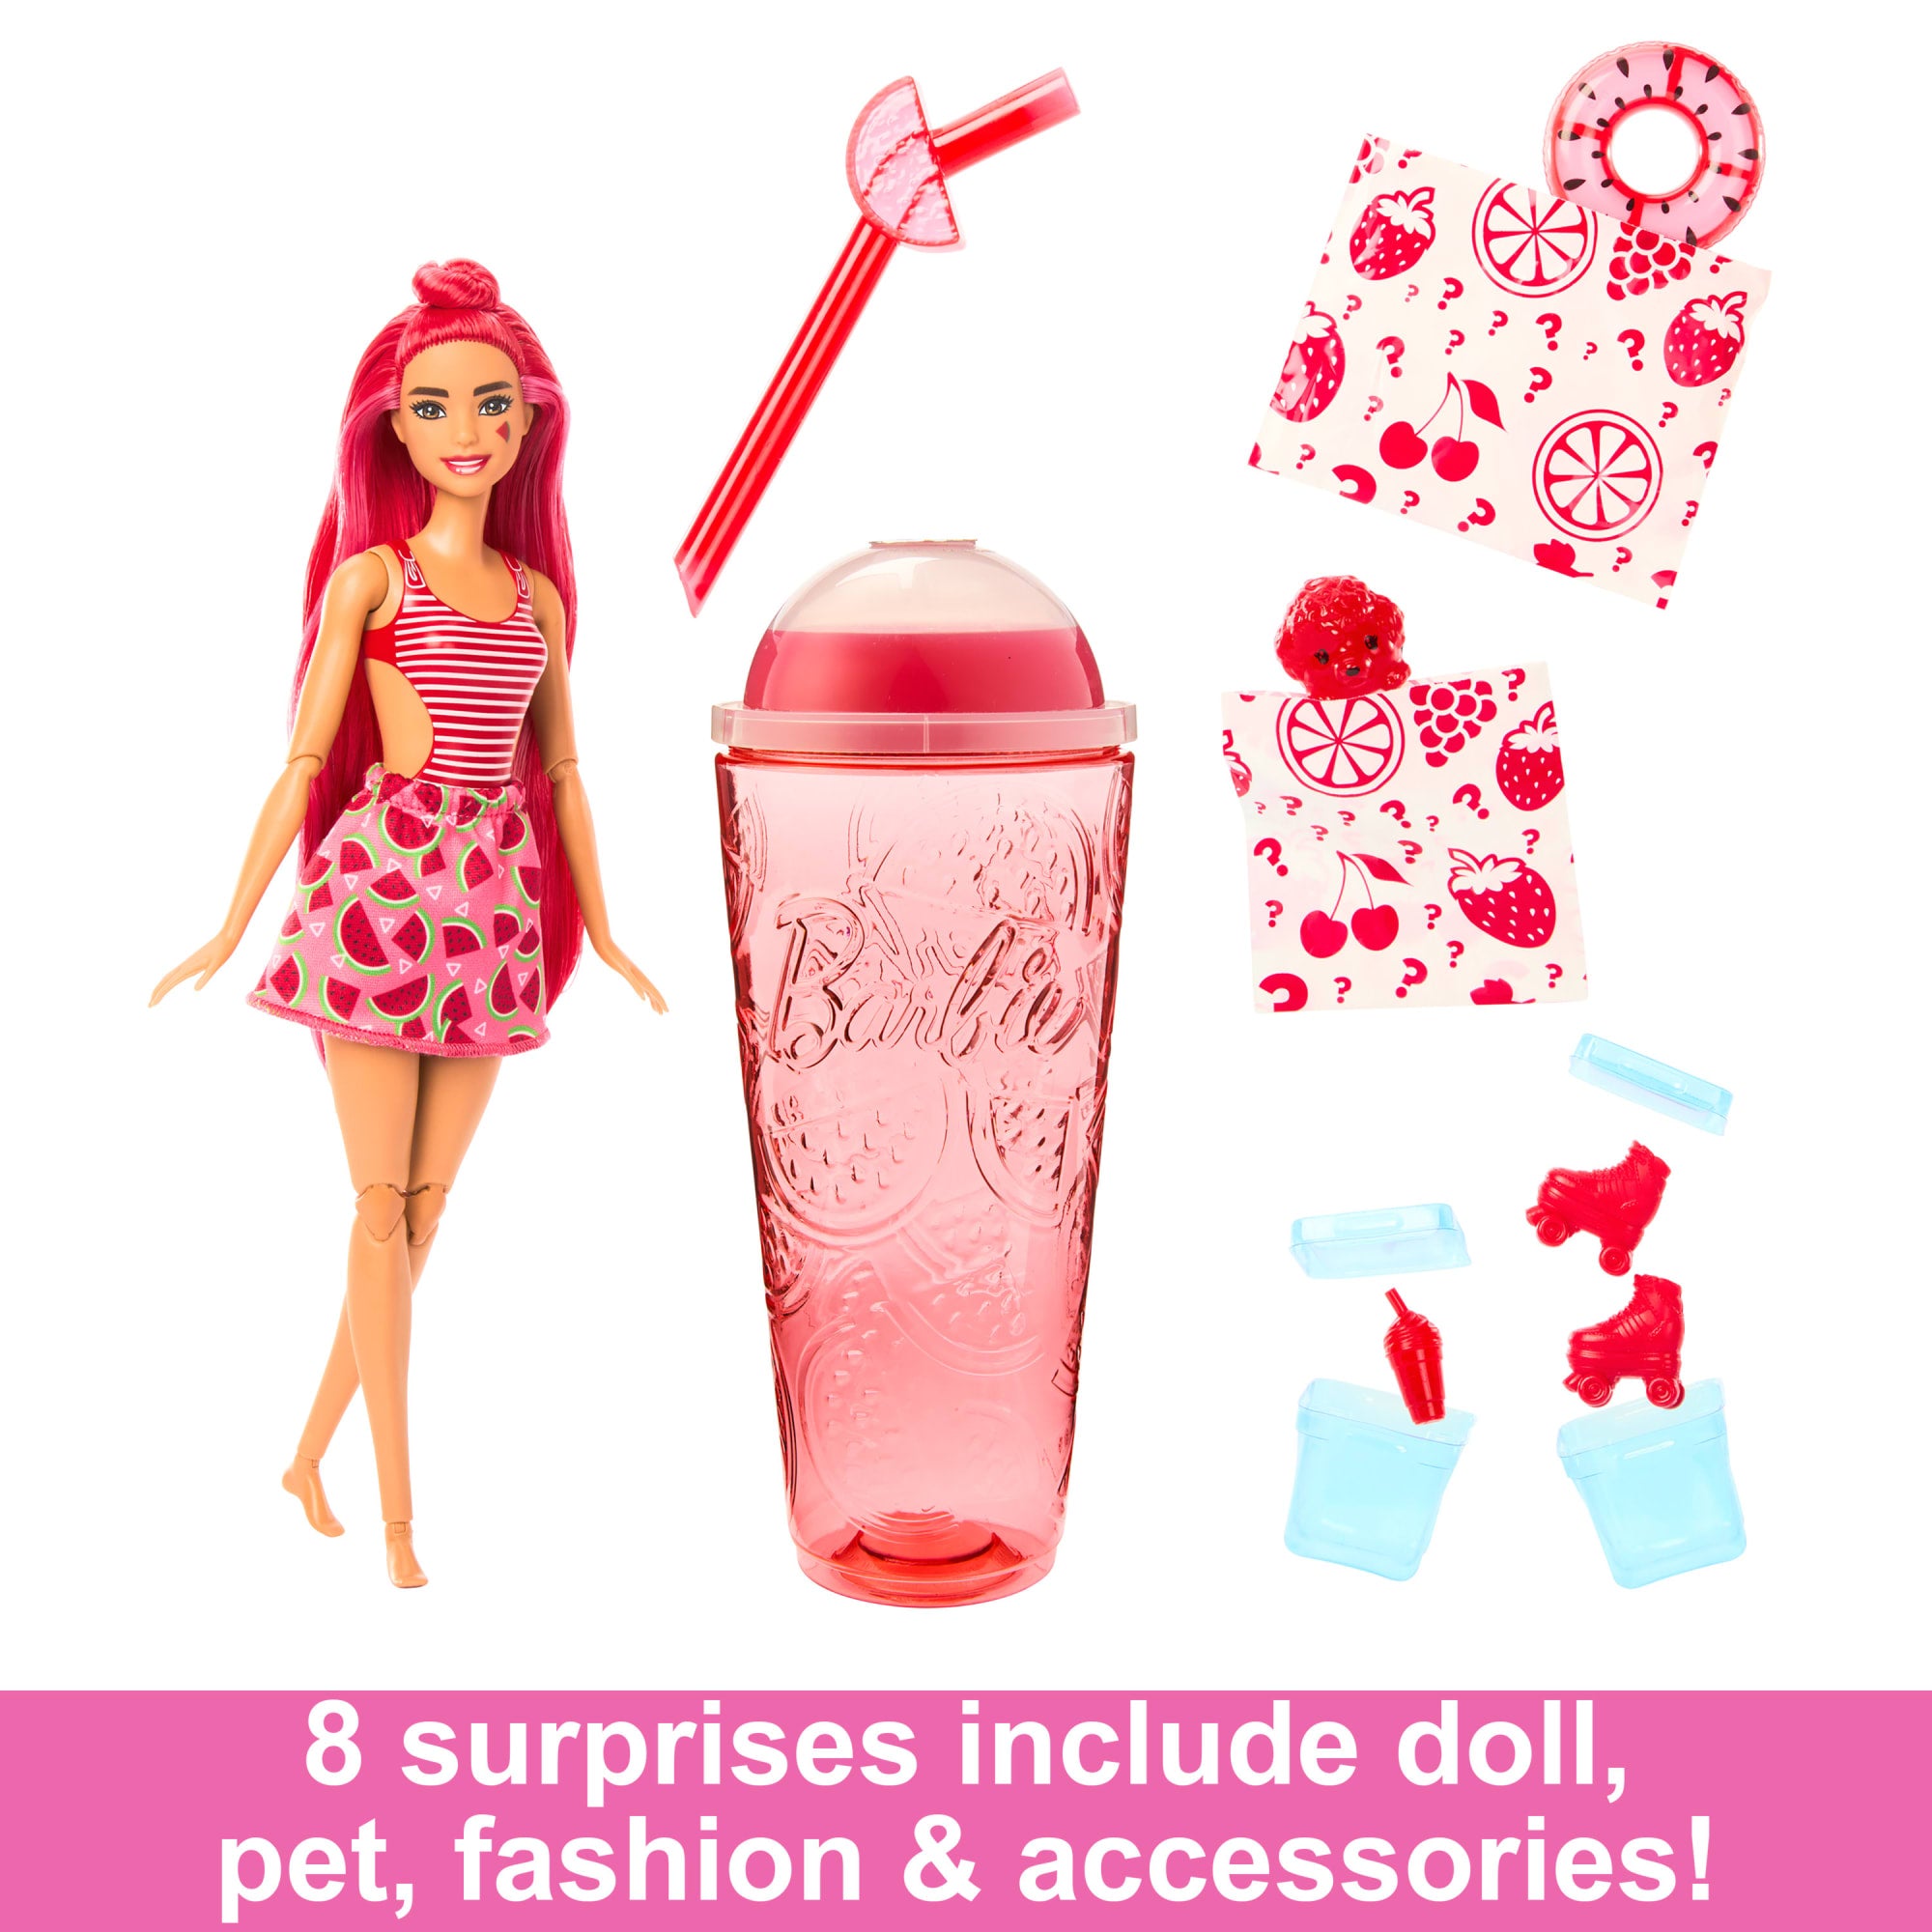 Mattel Pop Reveal Barbie® Playset